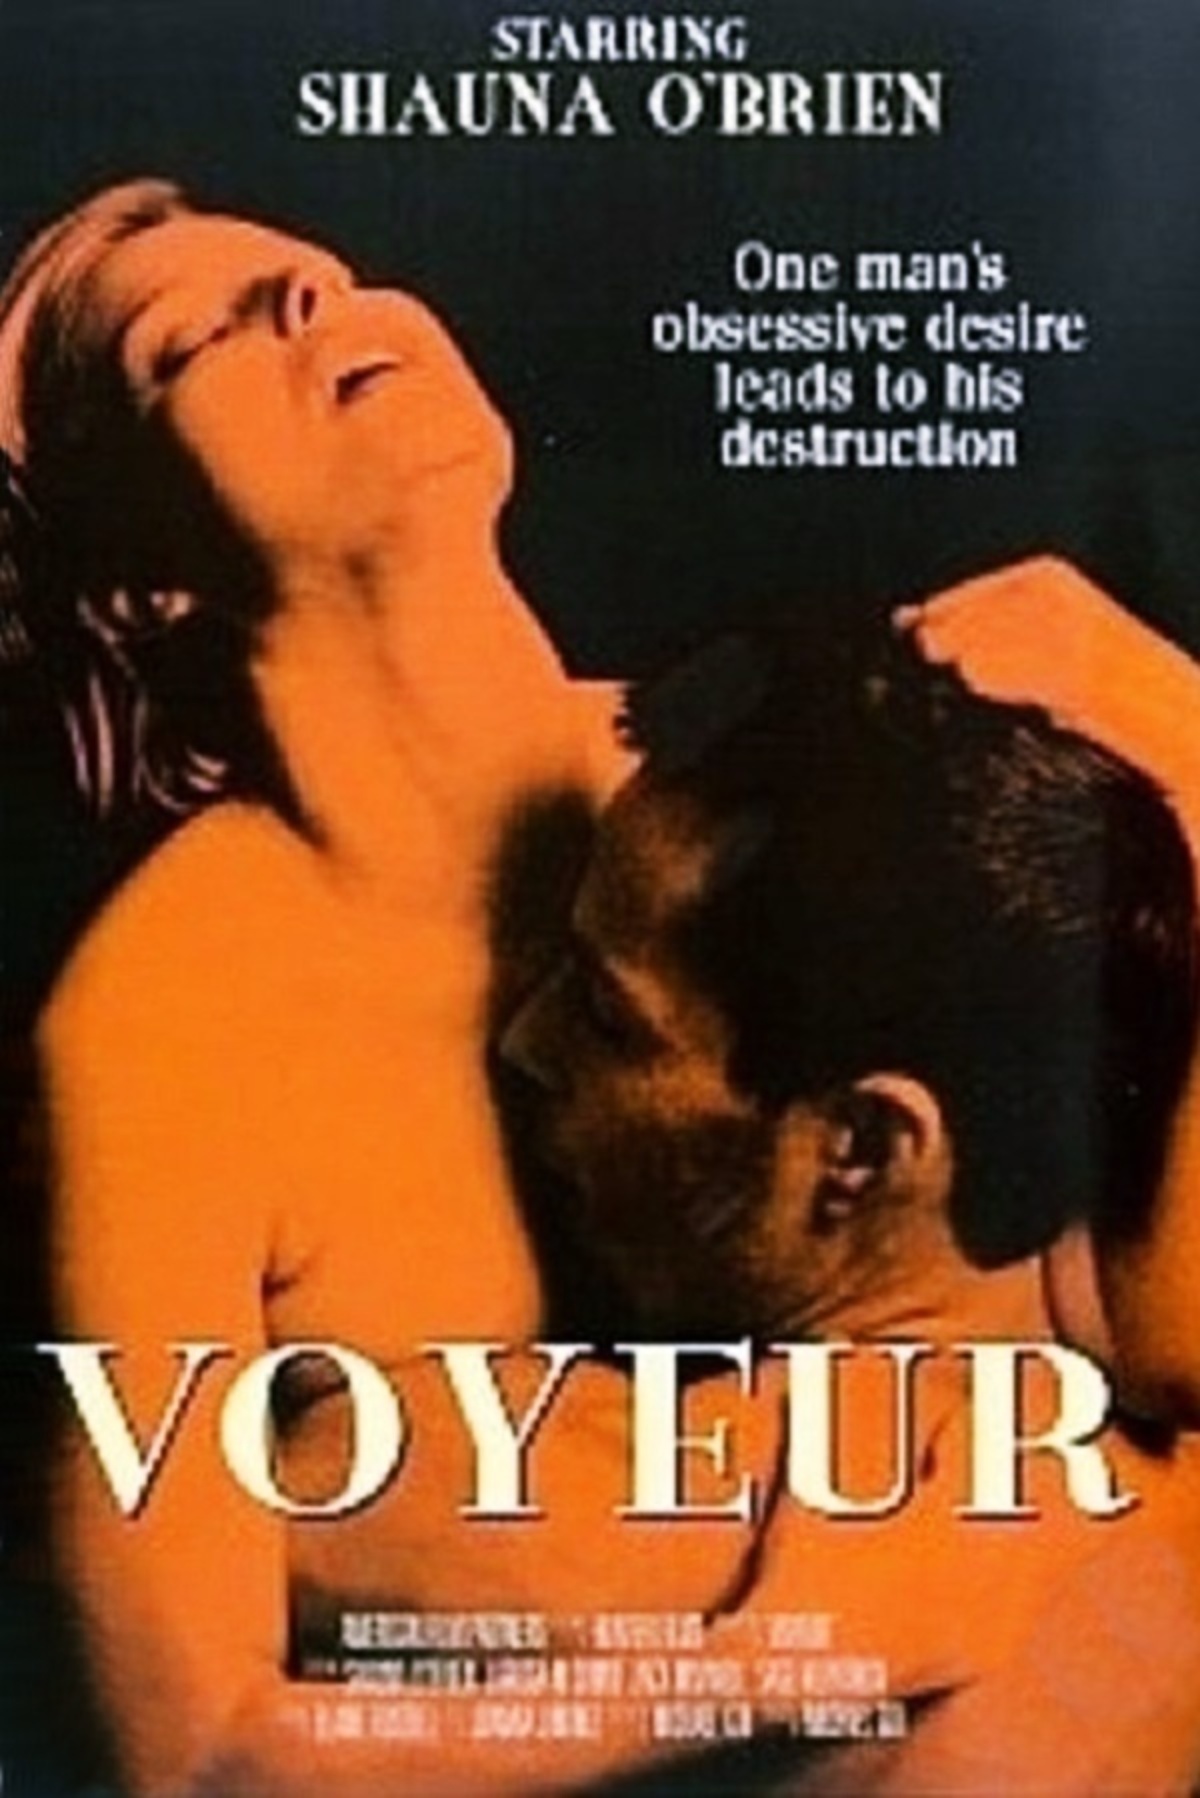 The voyeur movie